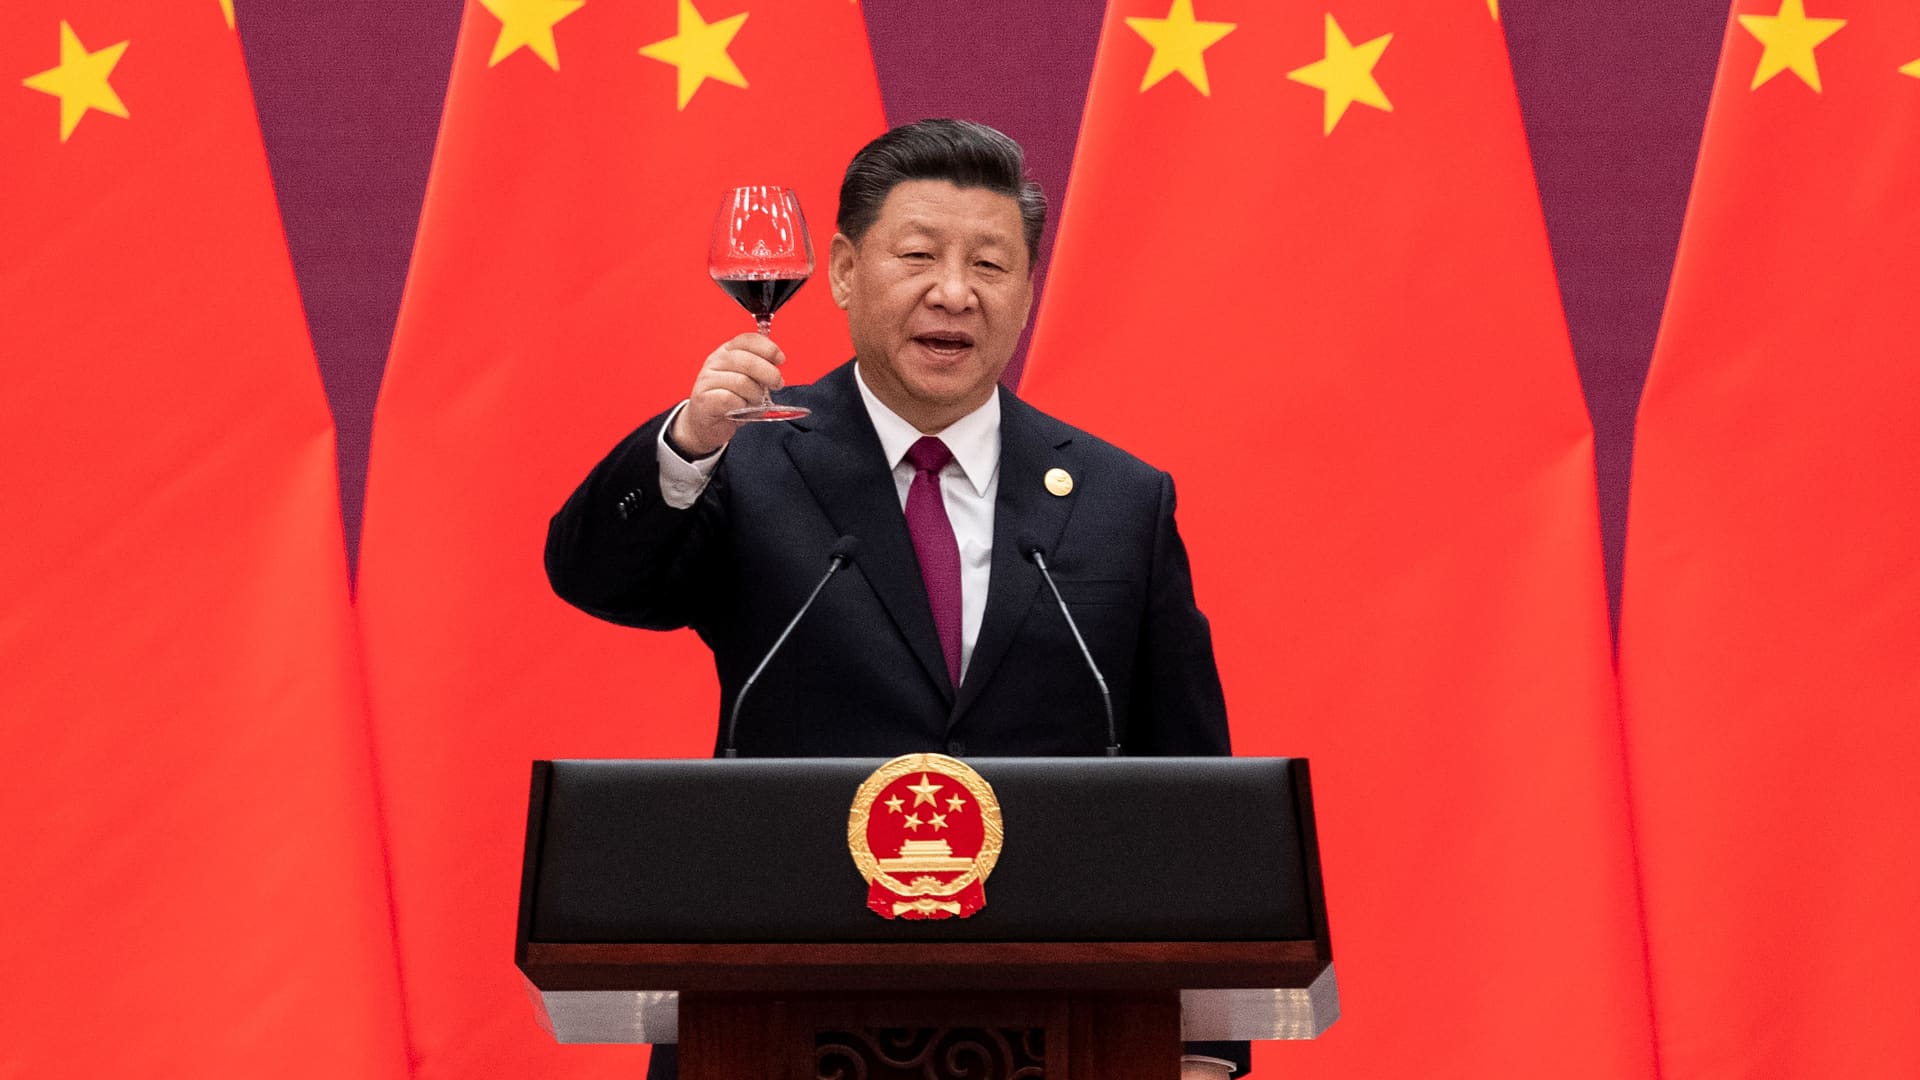 Xi Jinping’s tech policy in focus